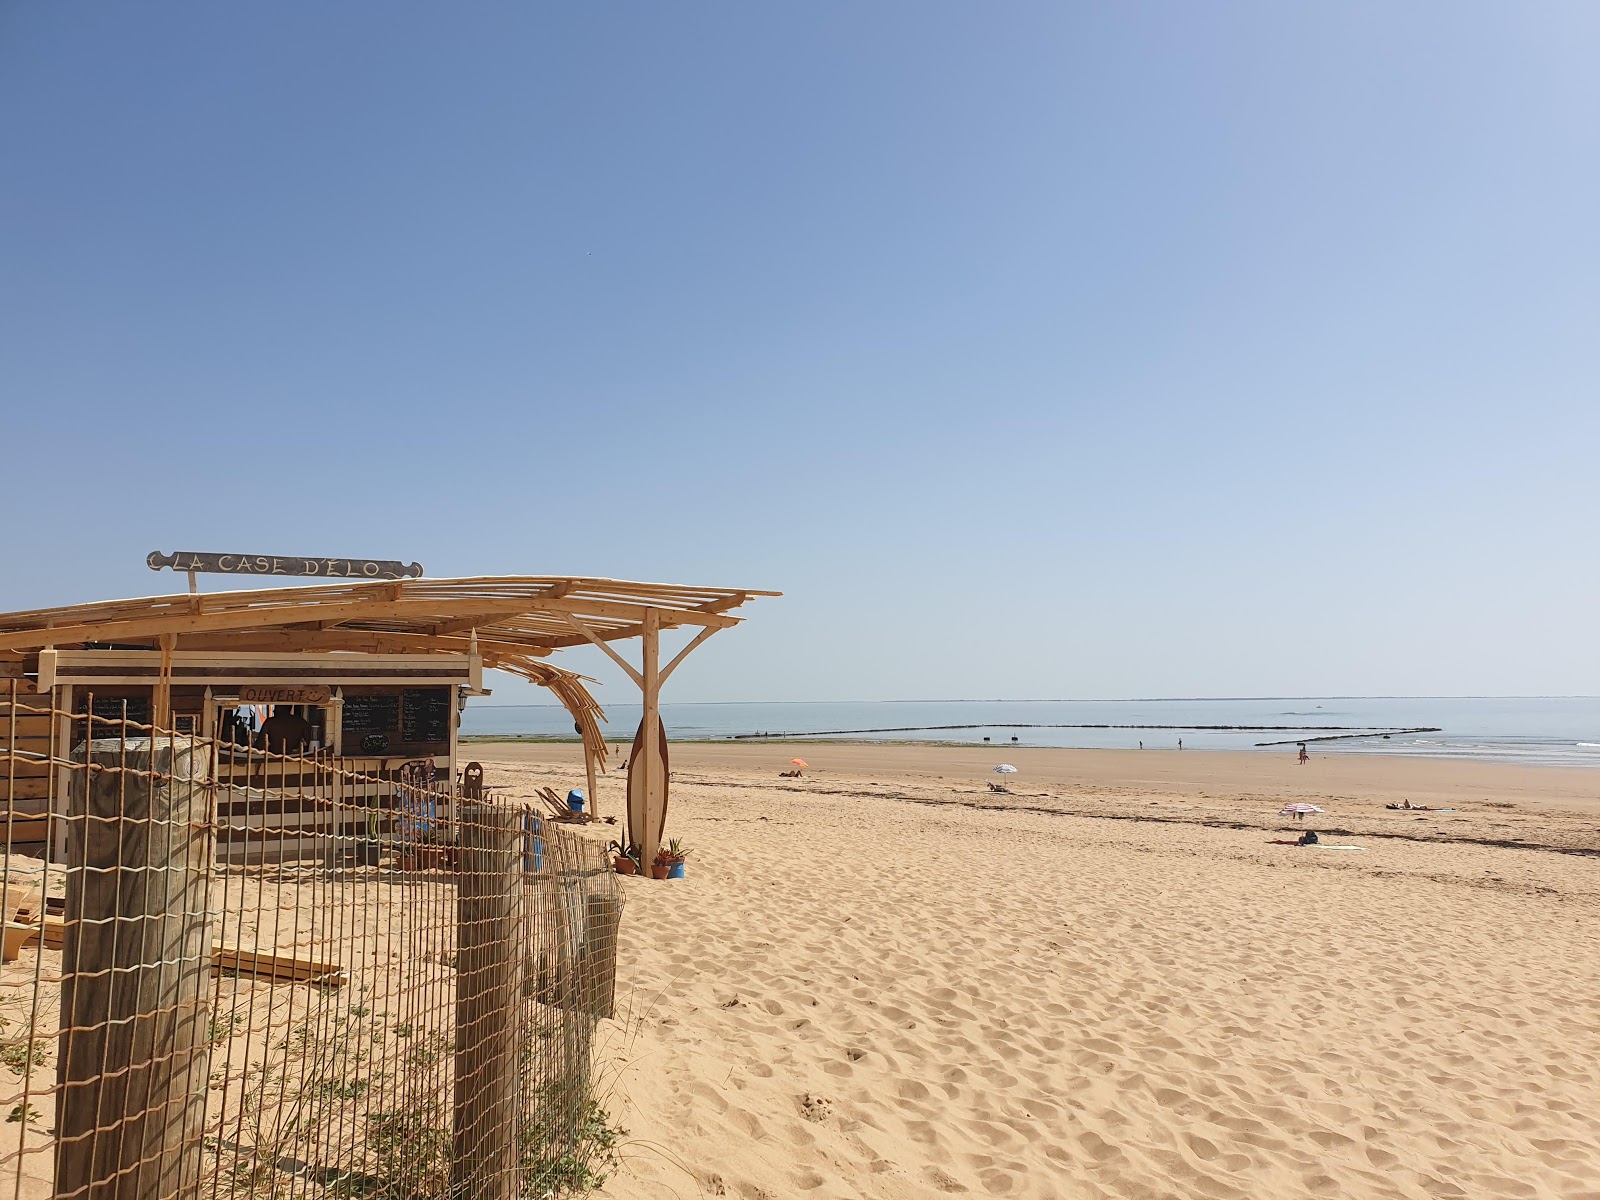 Foto de Corps de Garde beach - lugar popular entre os apreciadores de relaxamento